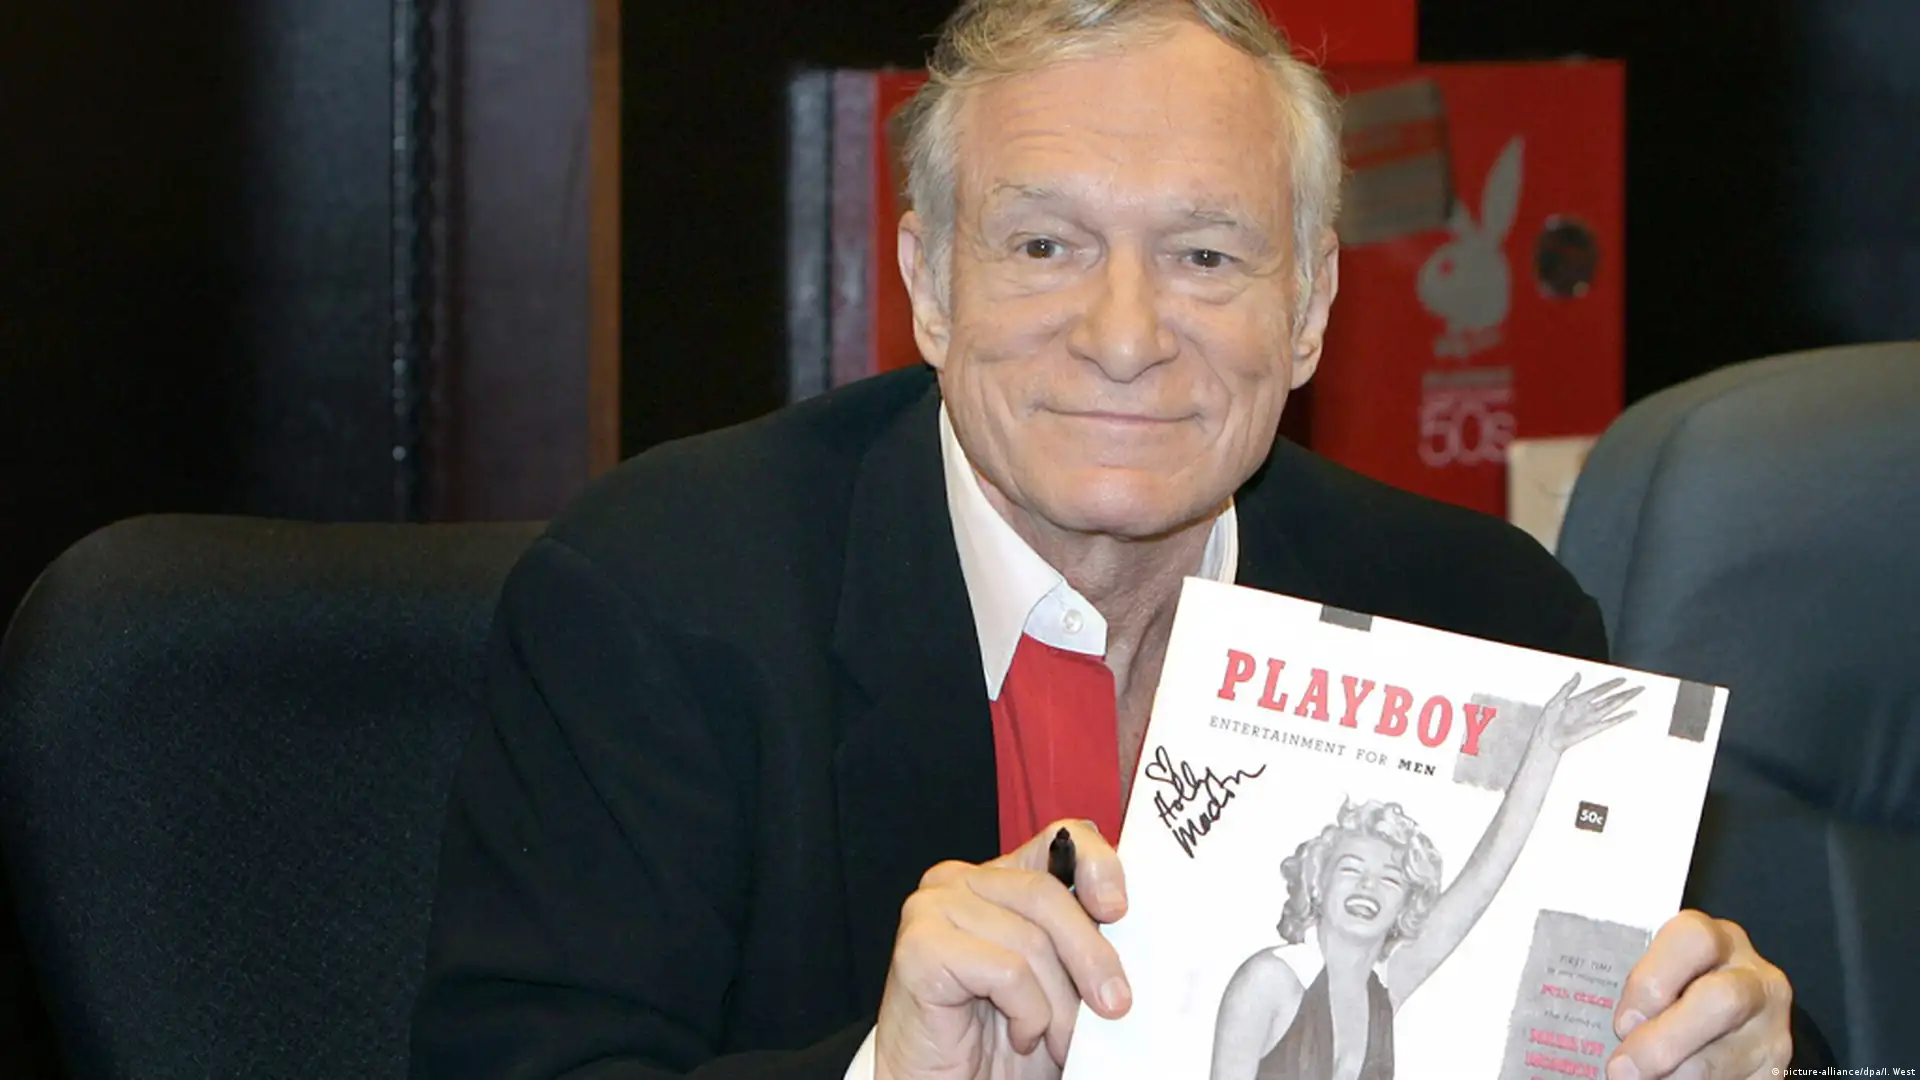 How Hugh Hefner changed the magazine world with Playboy – DW